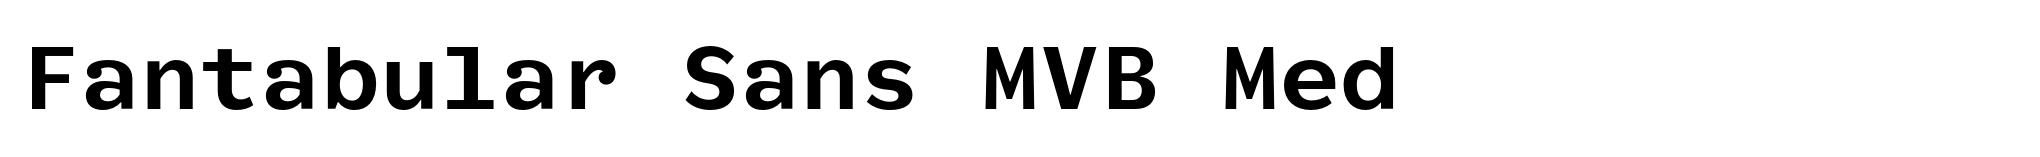 Fantabular Sans MVB Med image